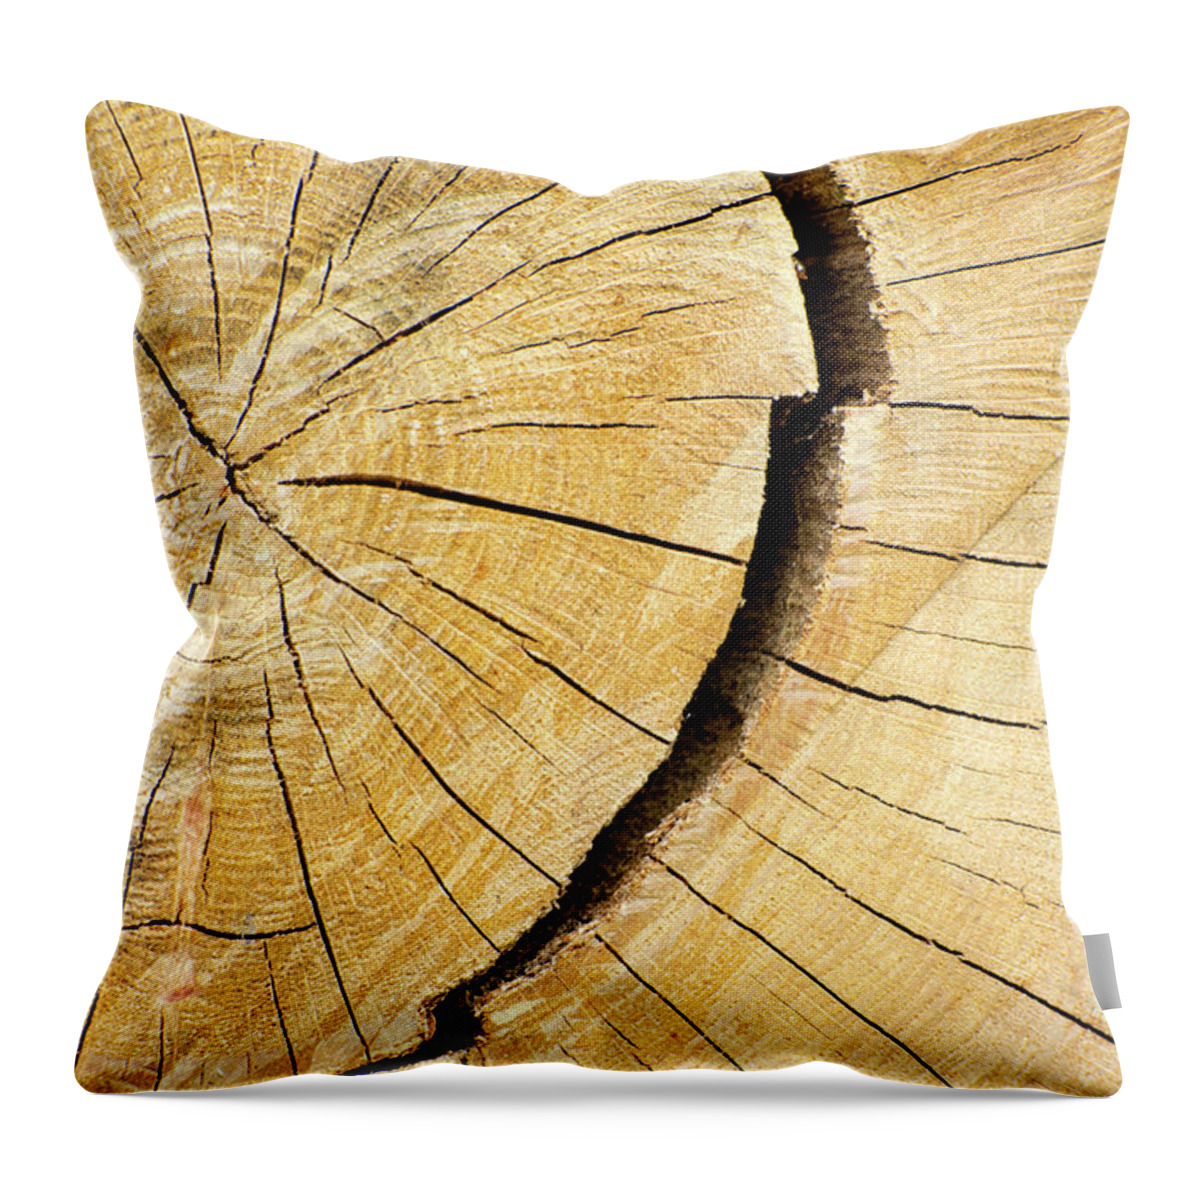 Wood Grain Throw Pillow featuring the photograph Wood Grain Split Log Fresh Cut by Christina Rollo